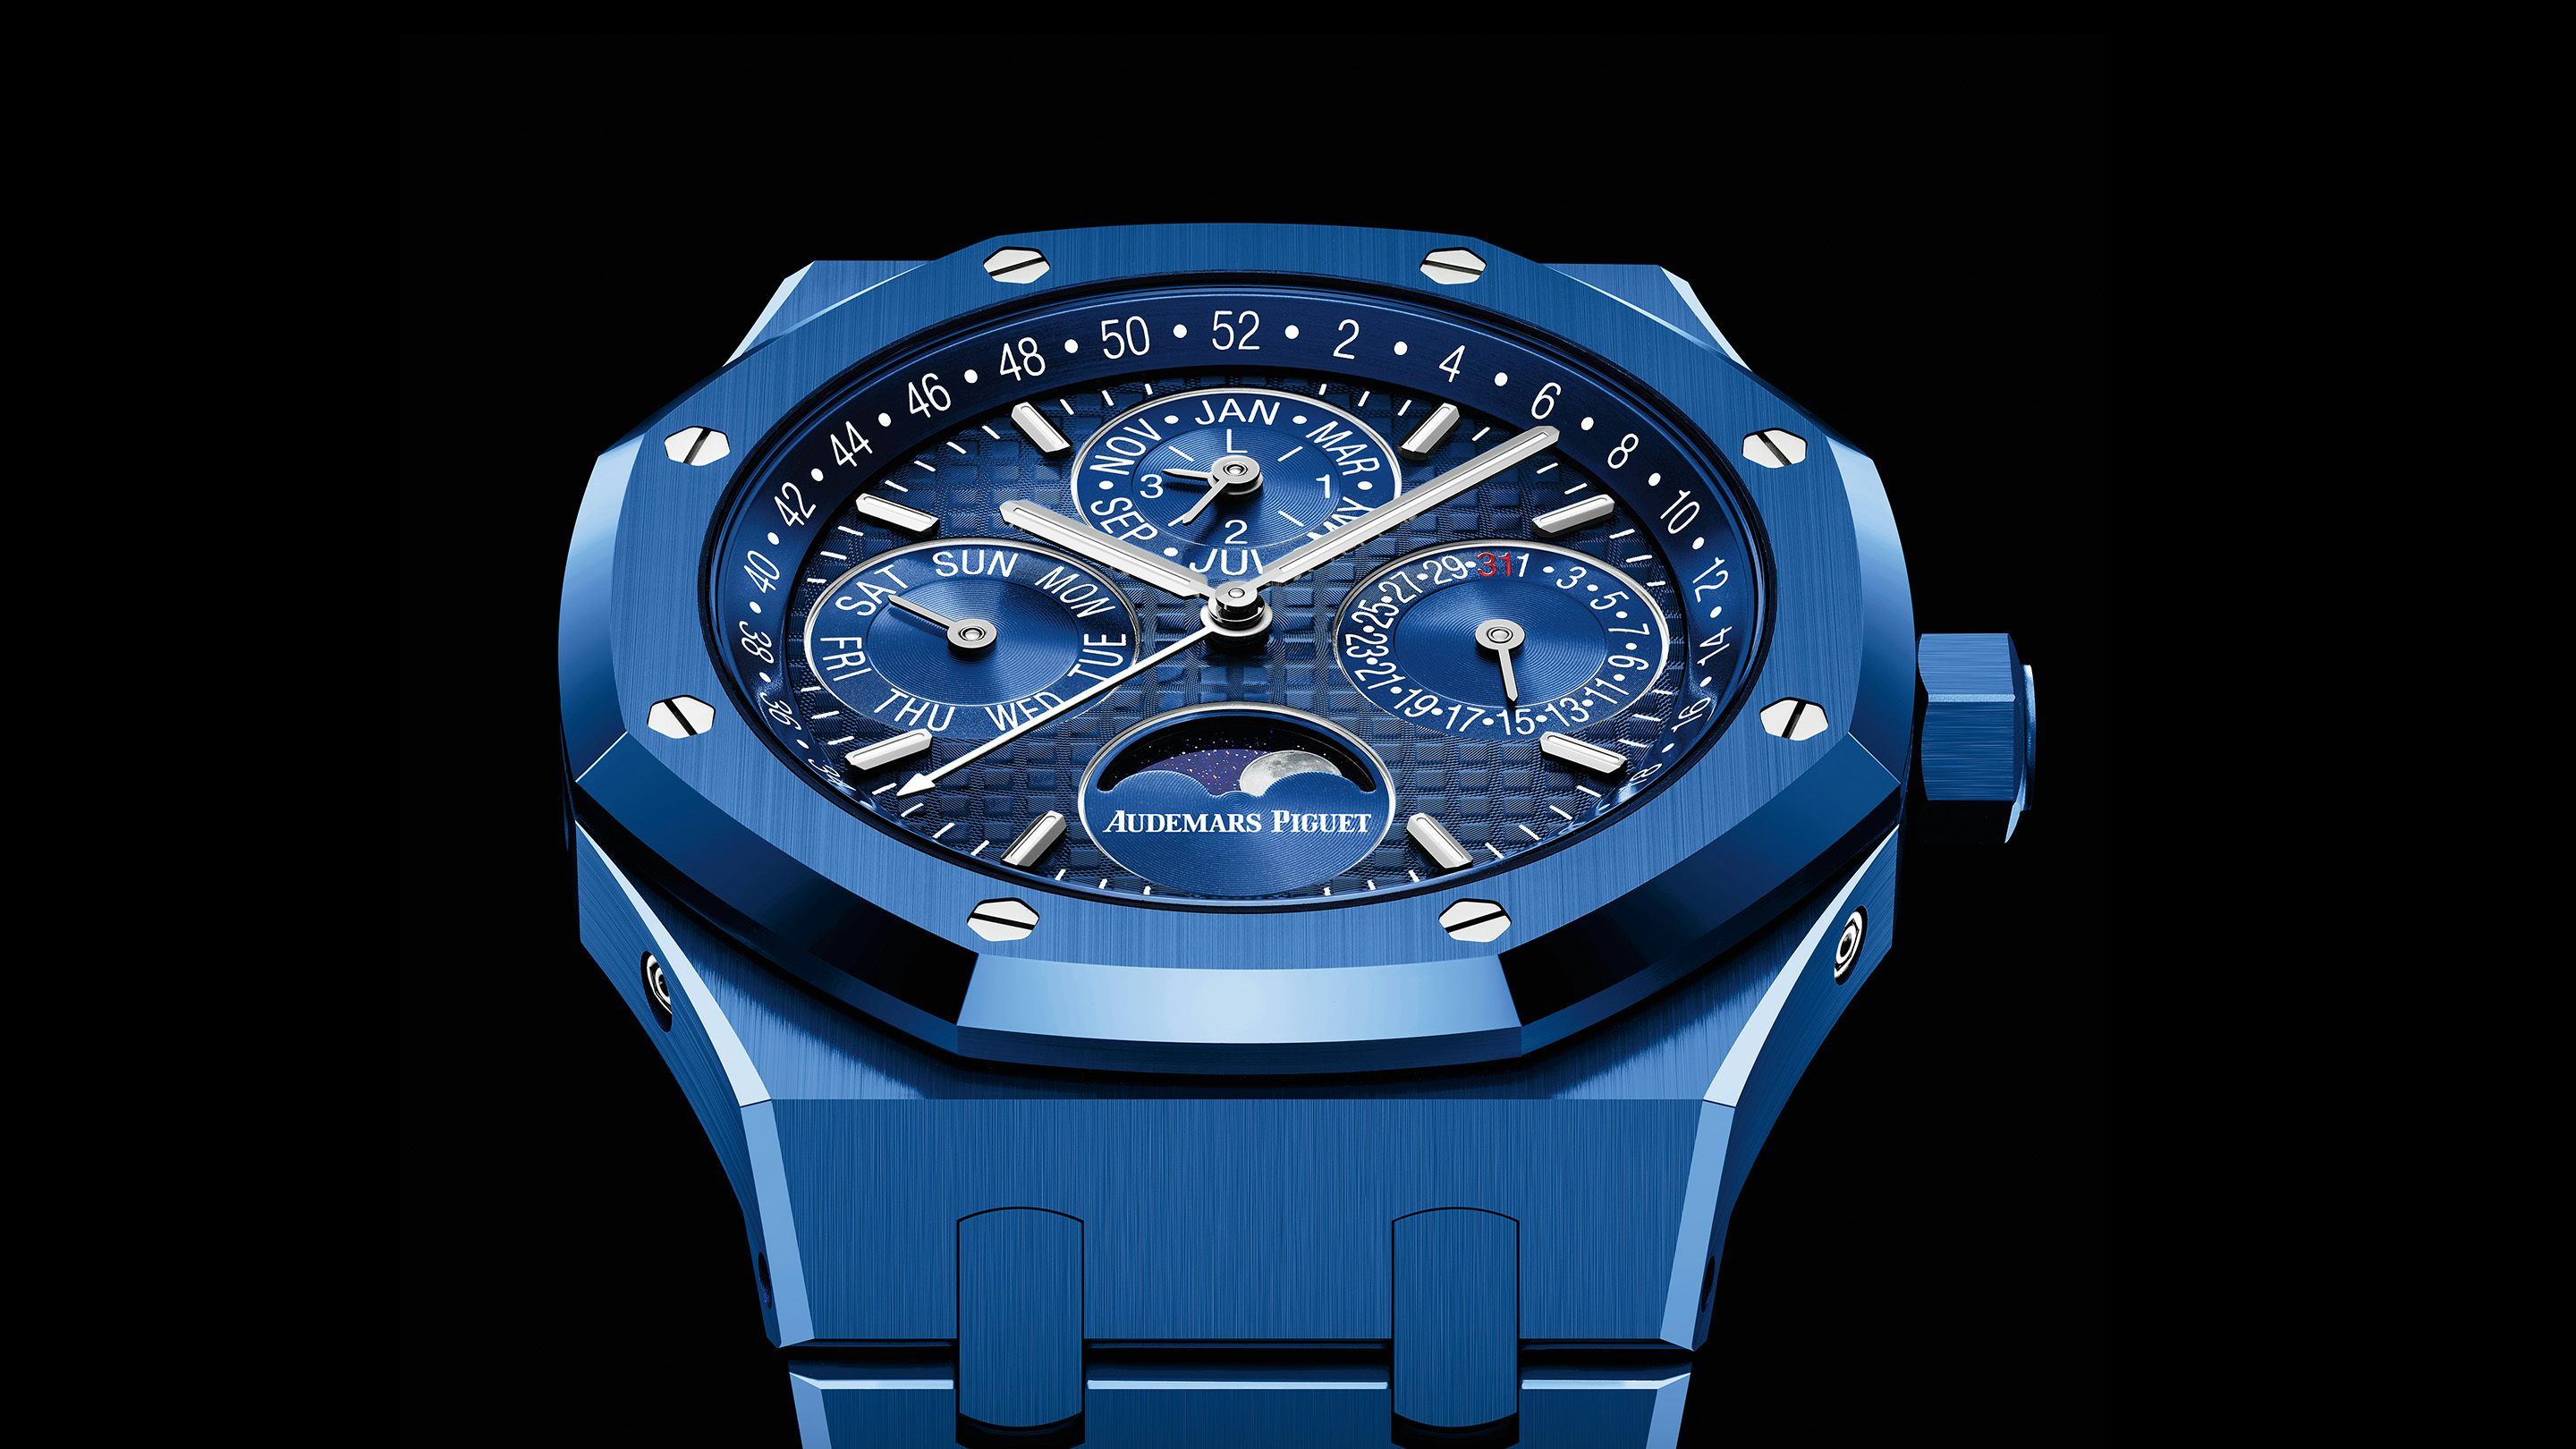 HODINKEE's Favourite Watches From Geneva Watch Days 2022